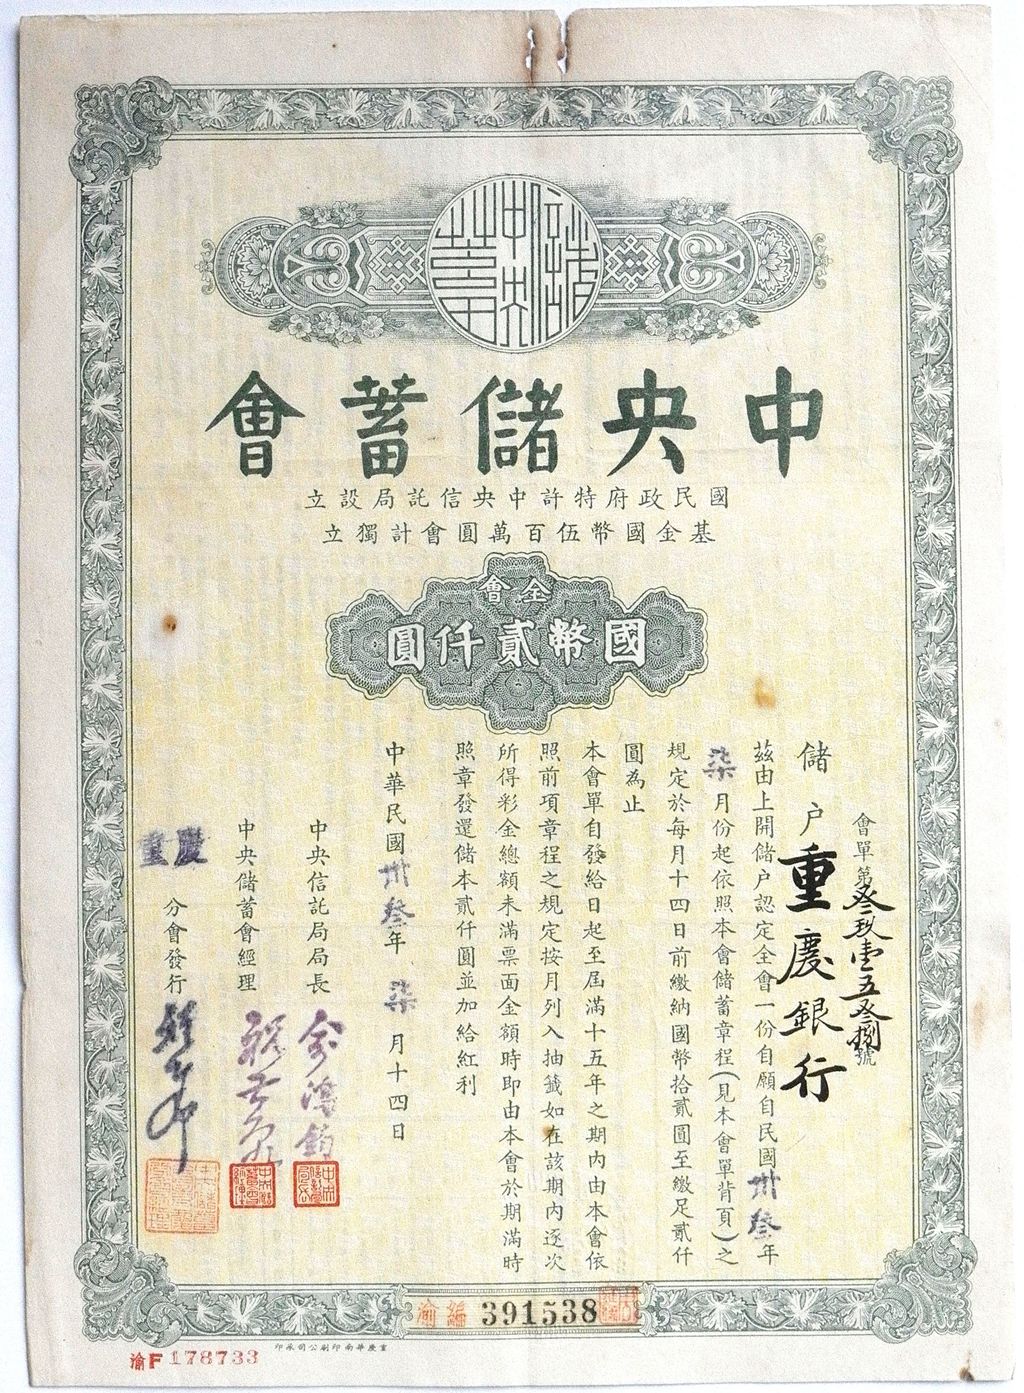 B2738, China Central Savings Society, 2000 Dollars (1 Lot) Lottery Bond Loan, 1944